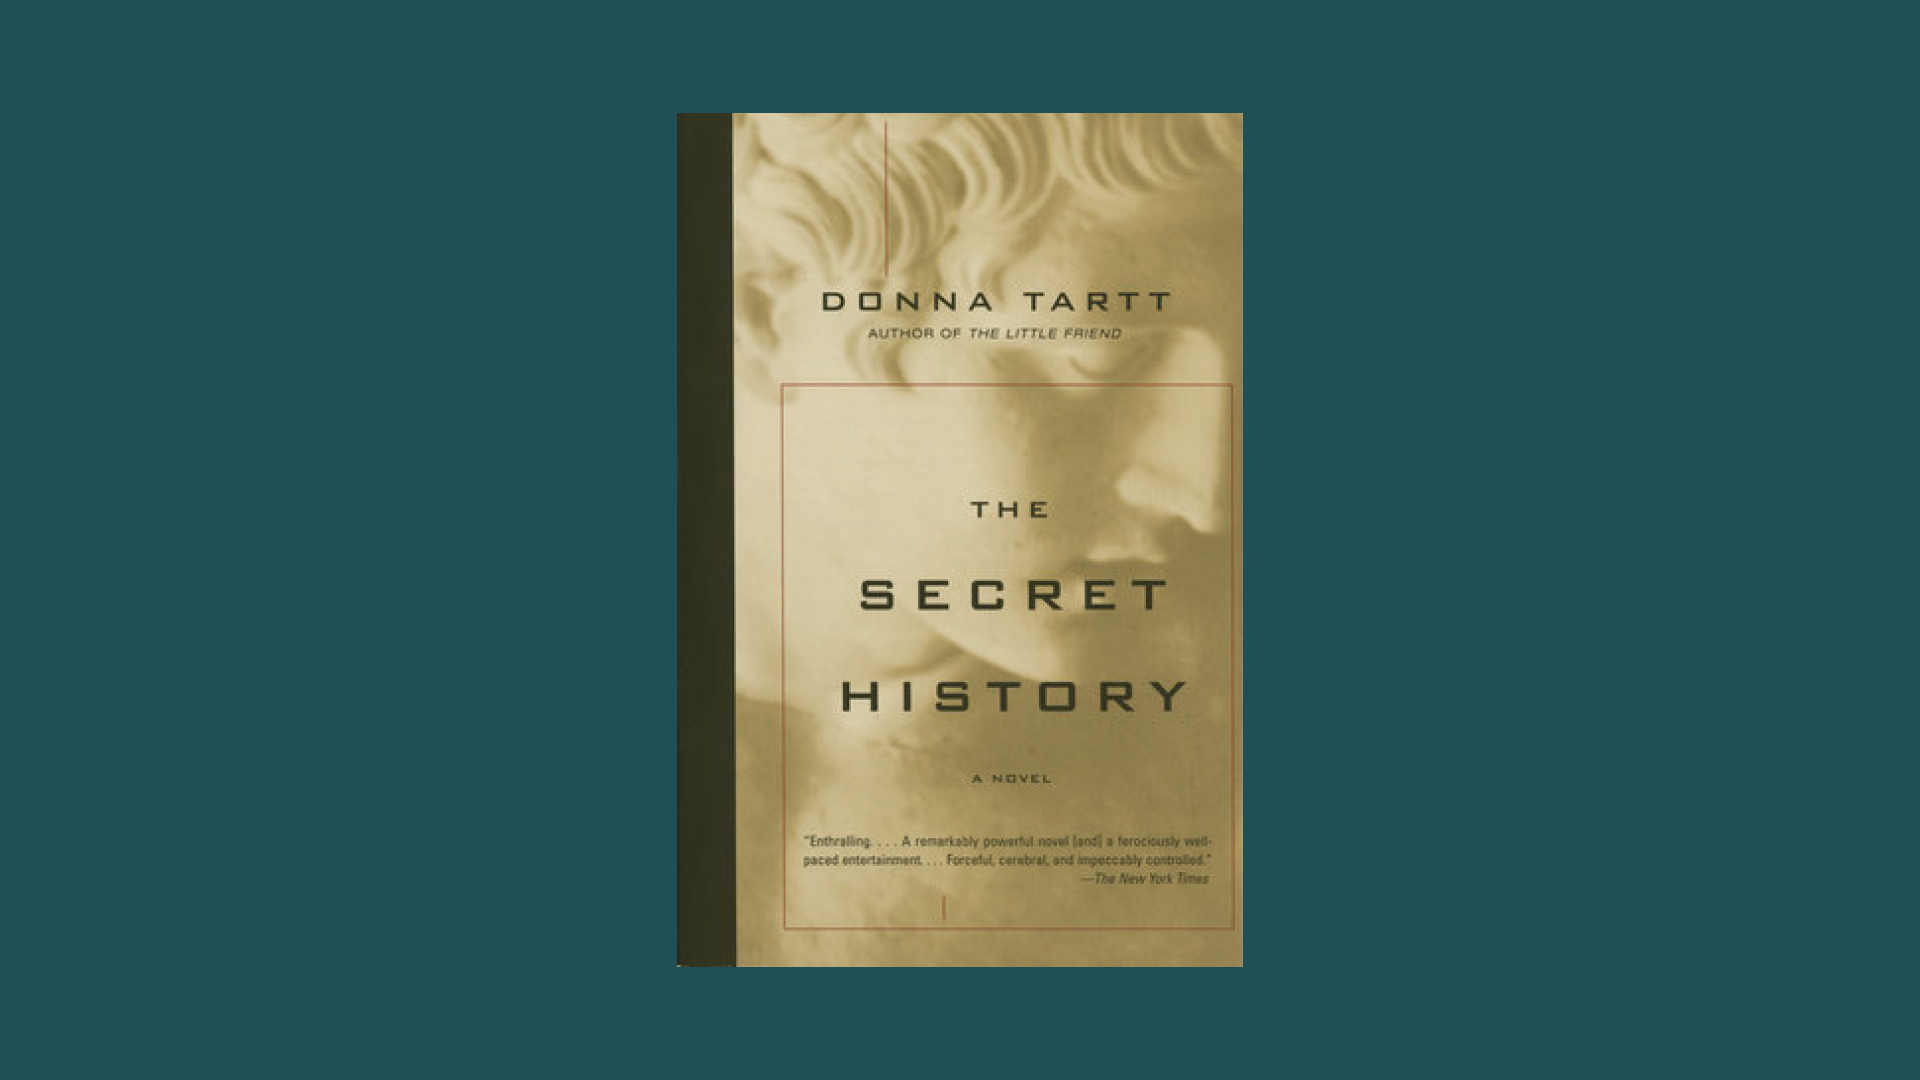 “The Secret History” by Donna Tartt